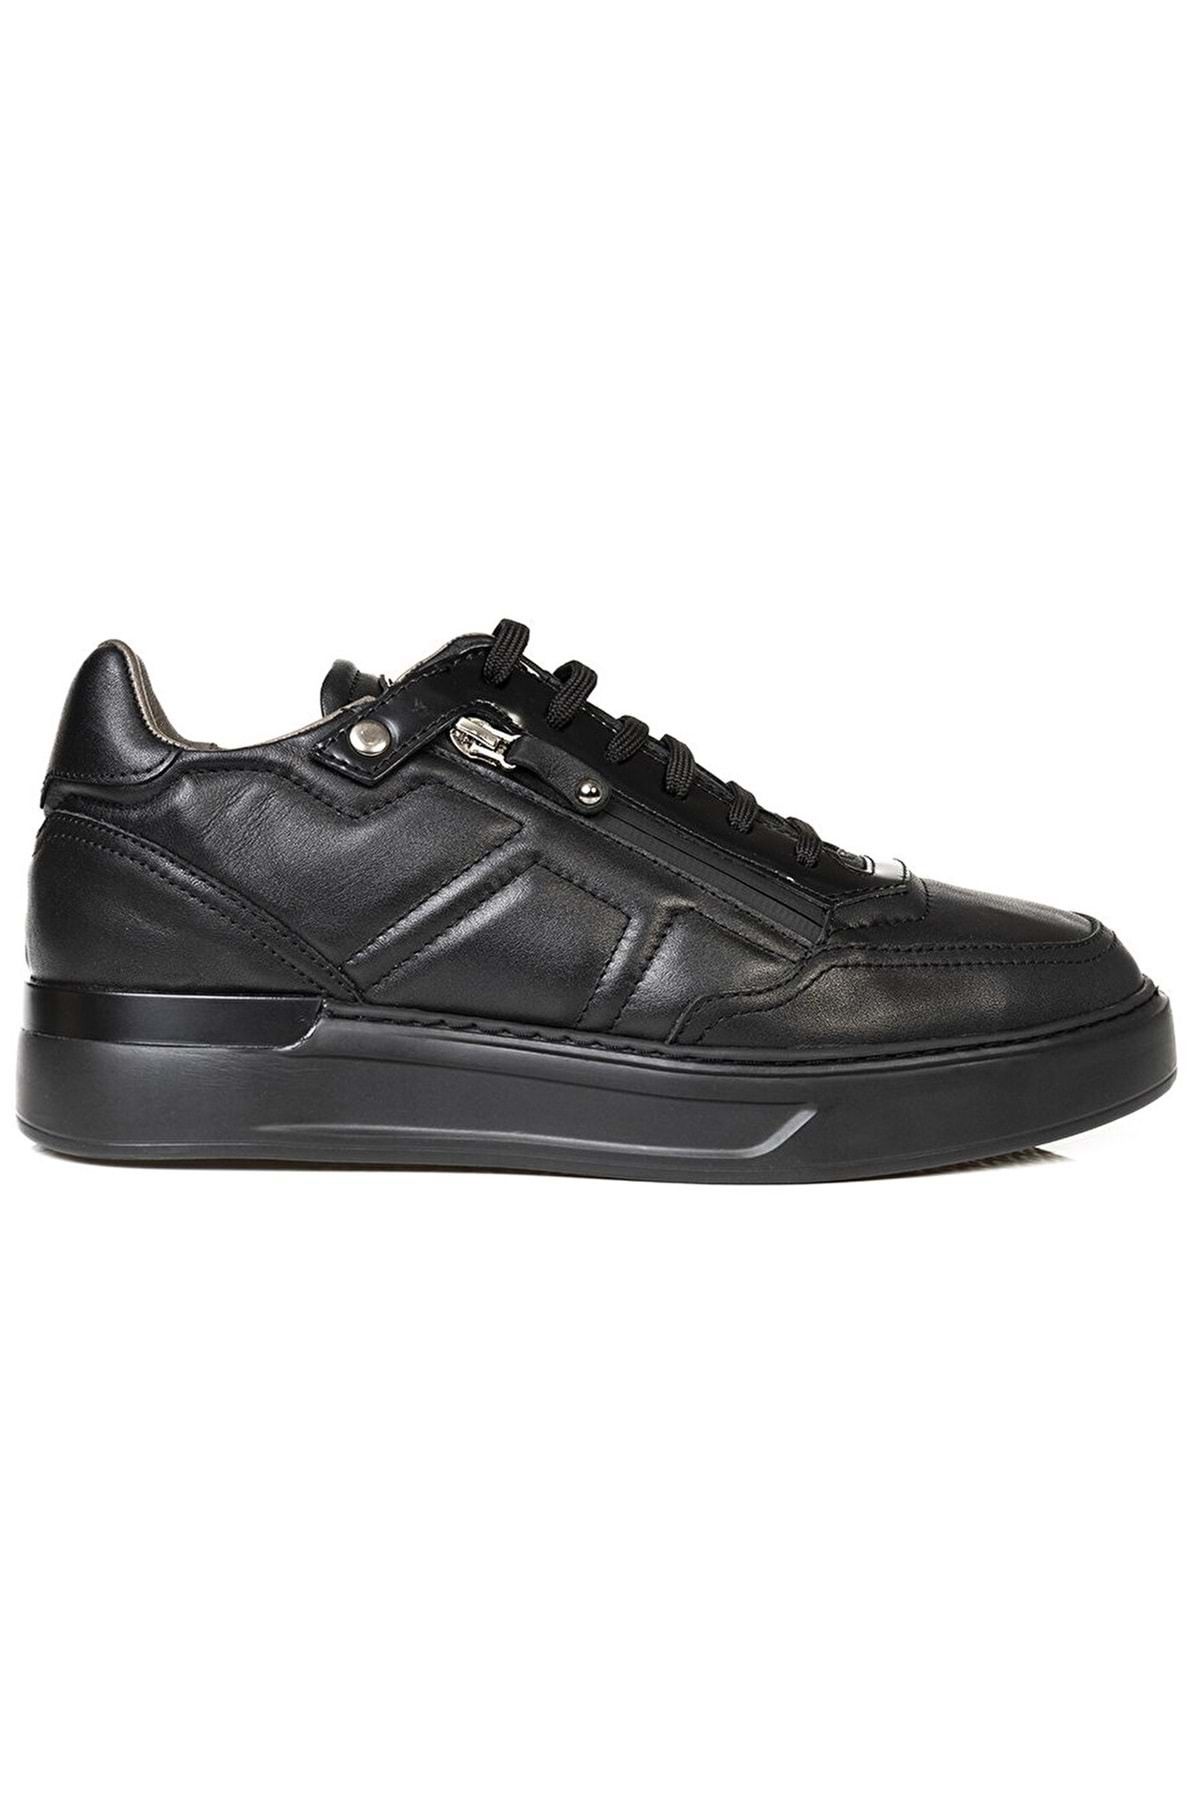 Greyder 16470 Comfort Sneaker Casual Erkek Ayakkabı Siyah